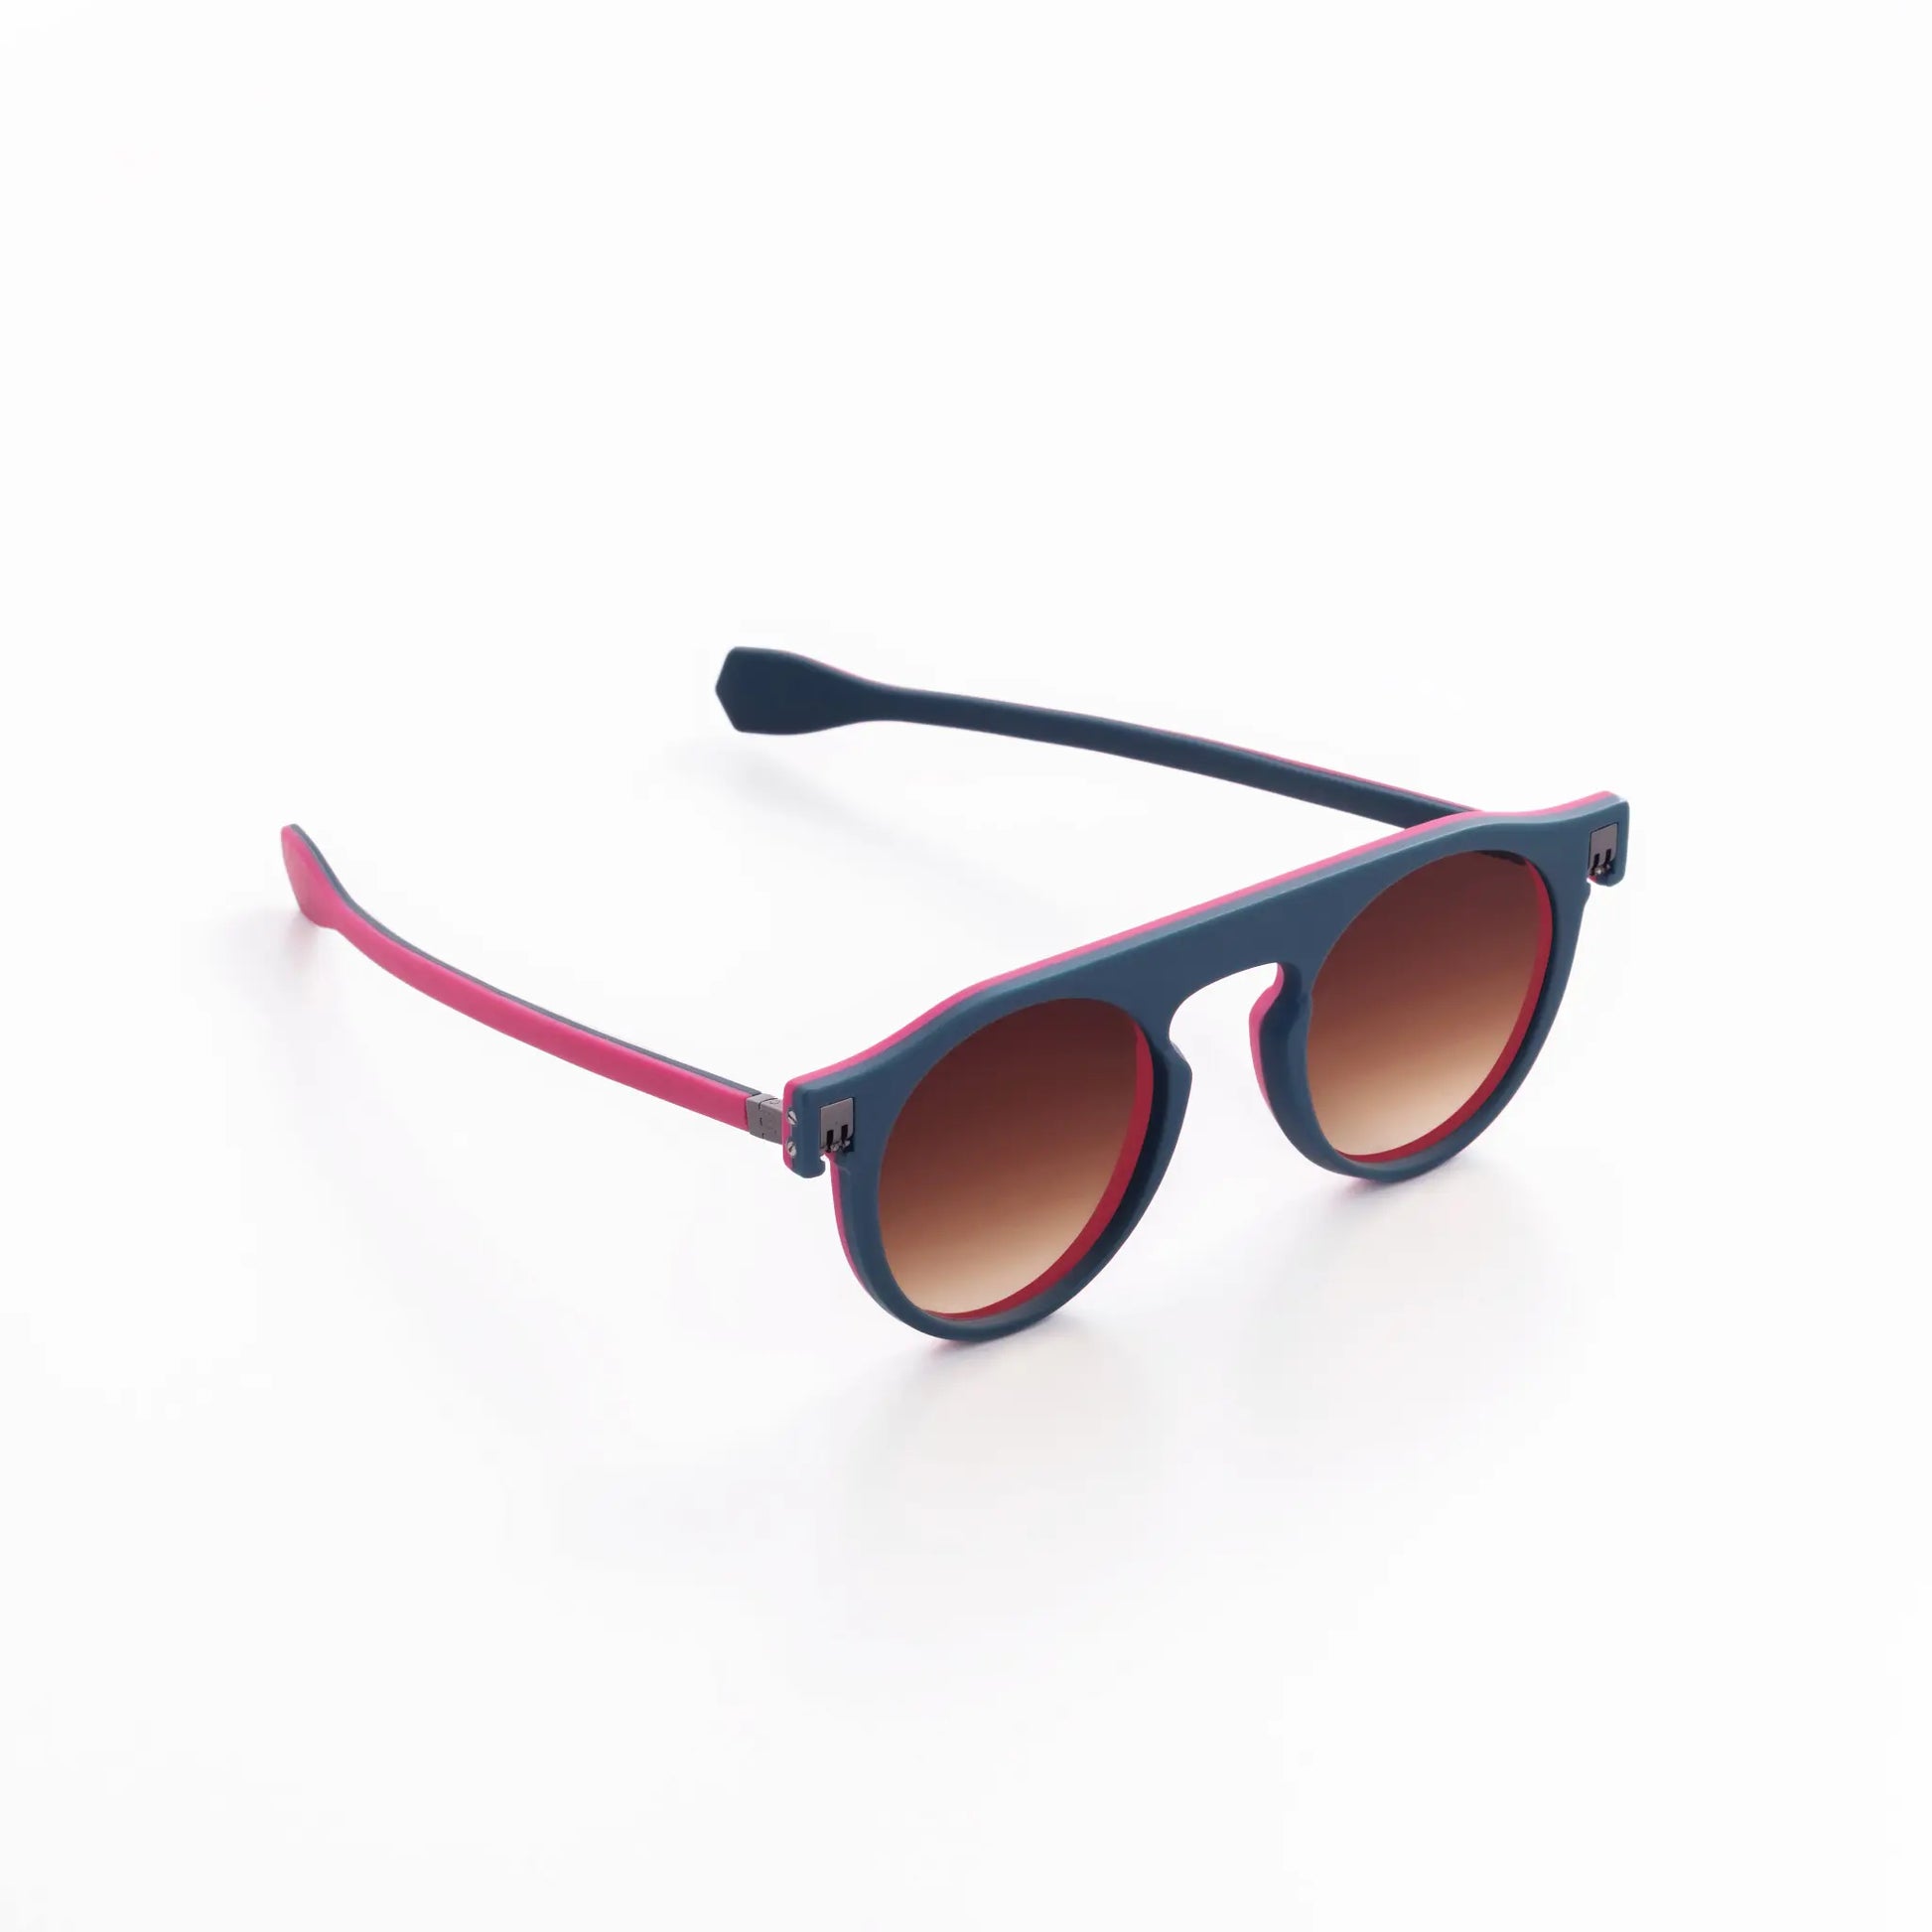 Reverso sunglasses pink & petrol reversible & ultra light side view 2